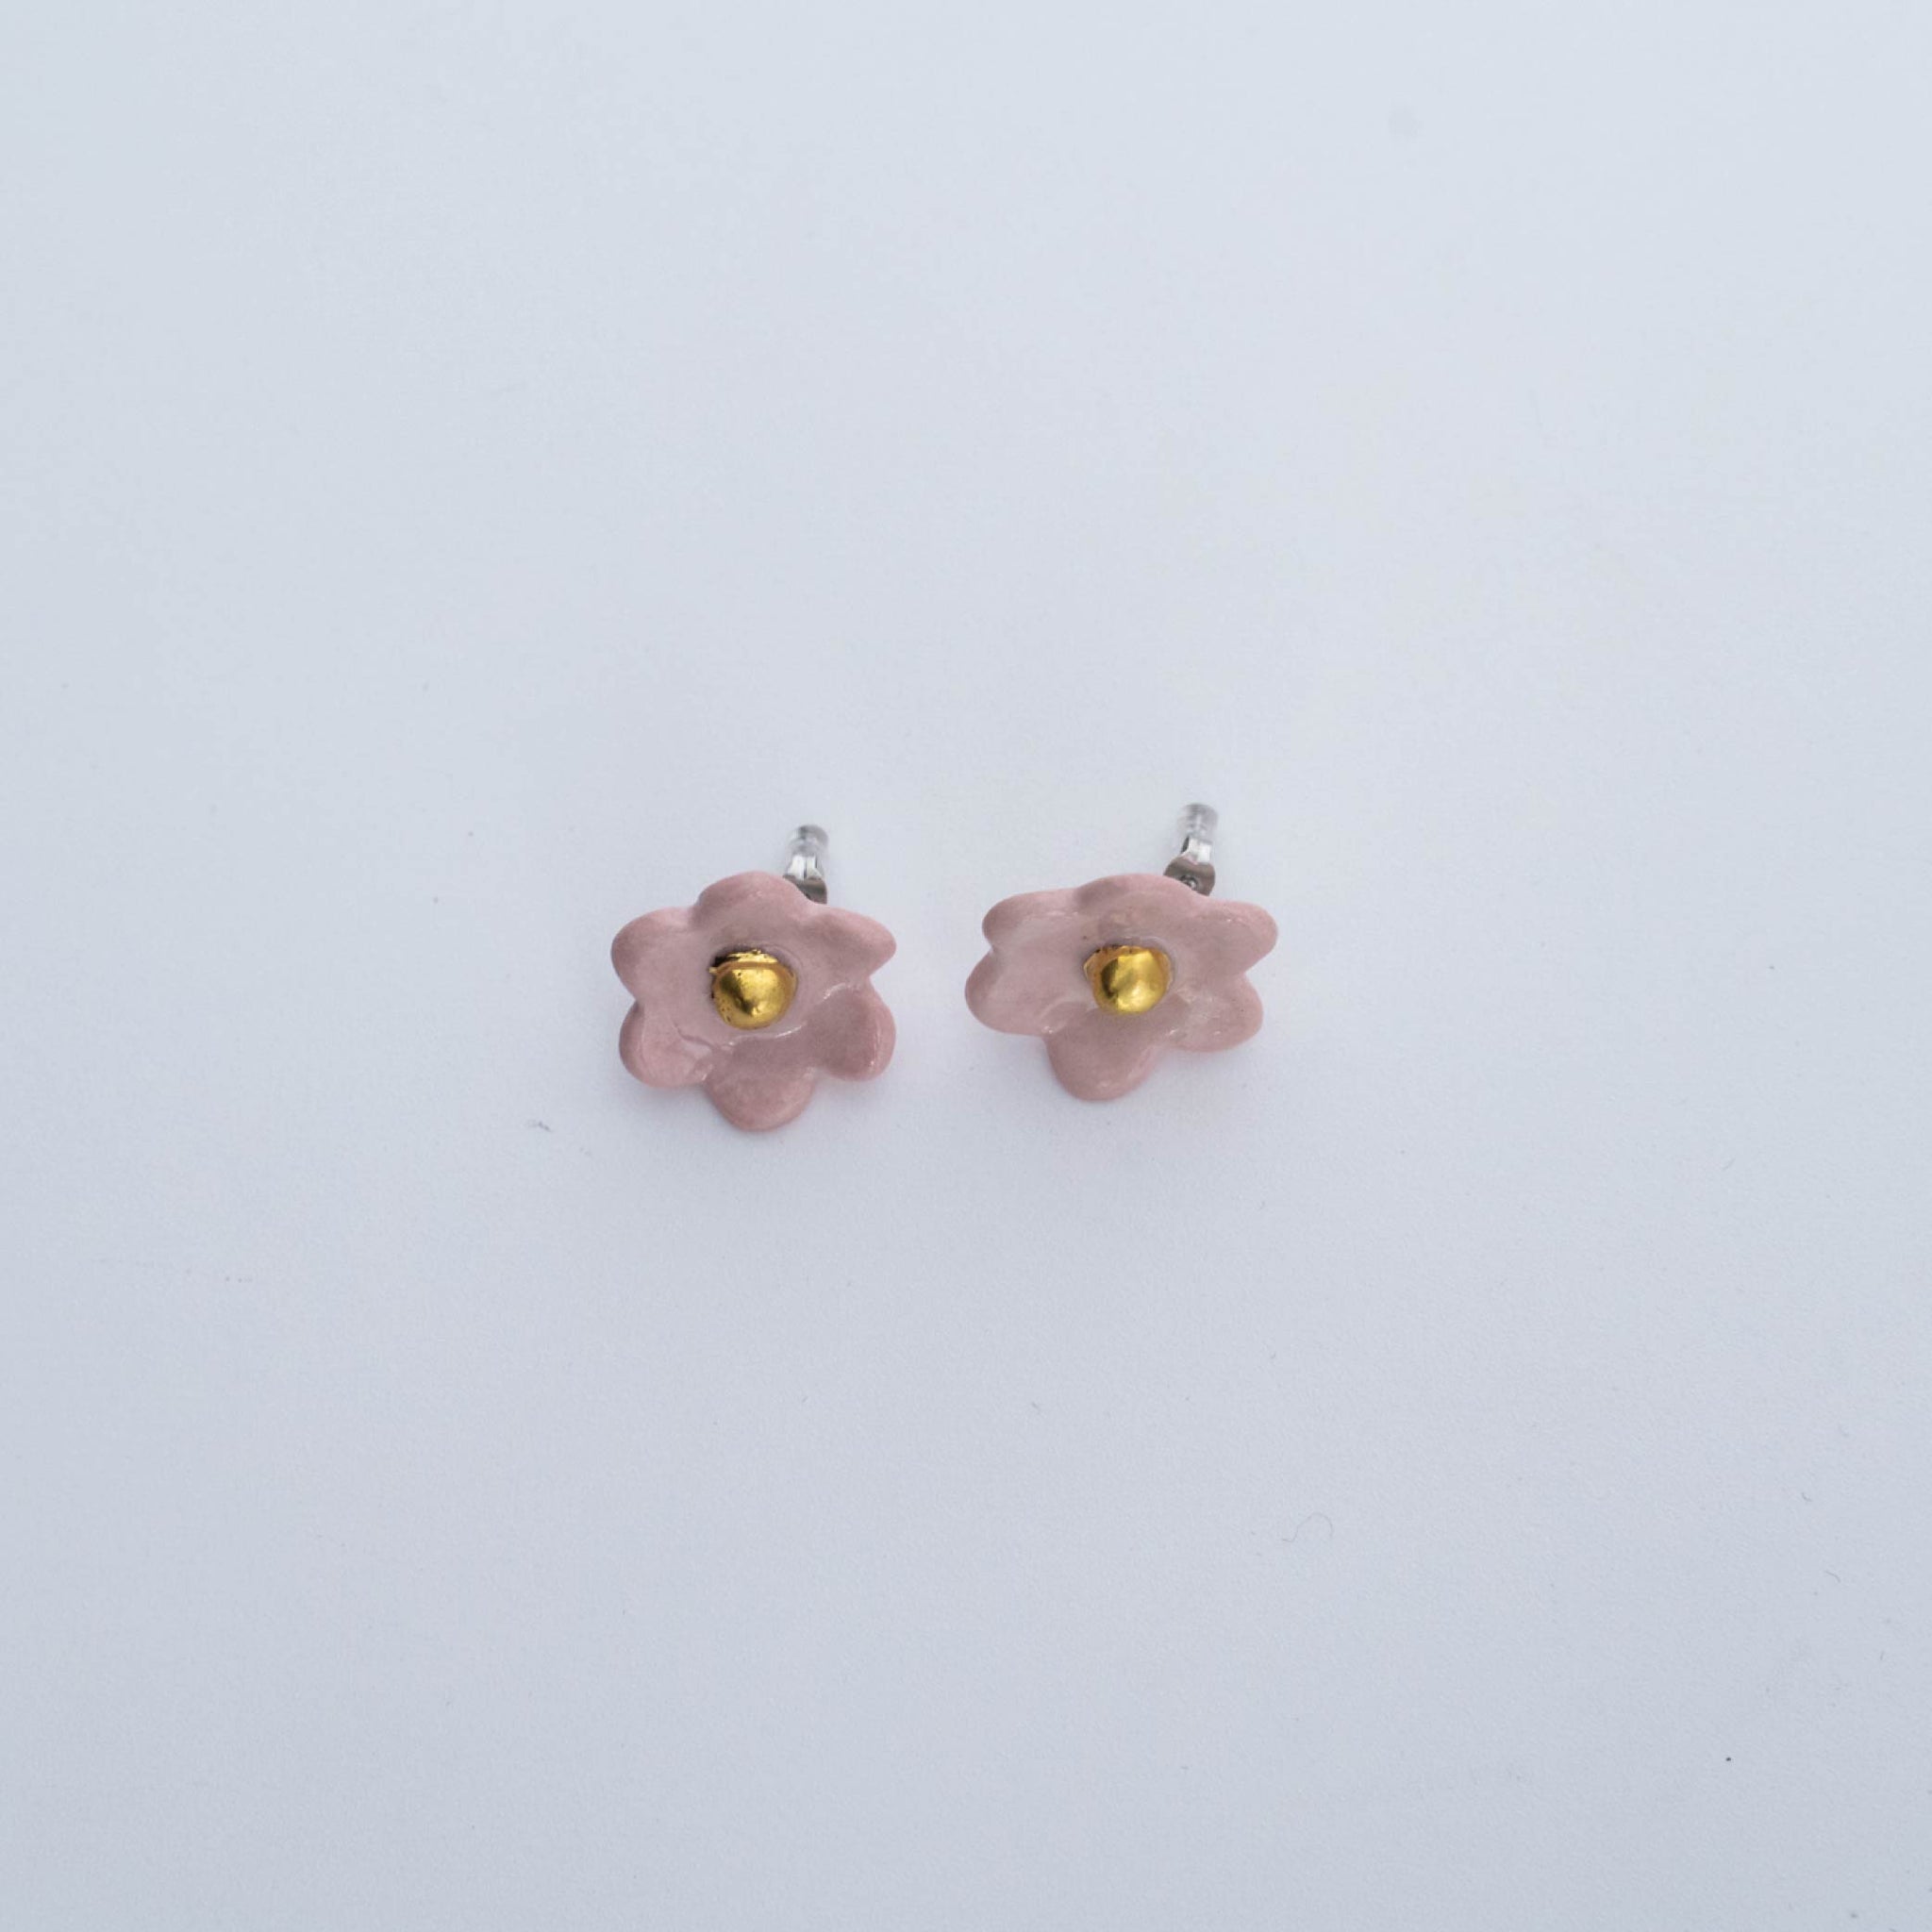 SMALL FLORY EARRINGS - Lemon Gold